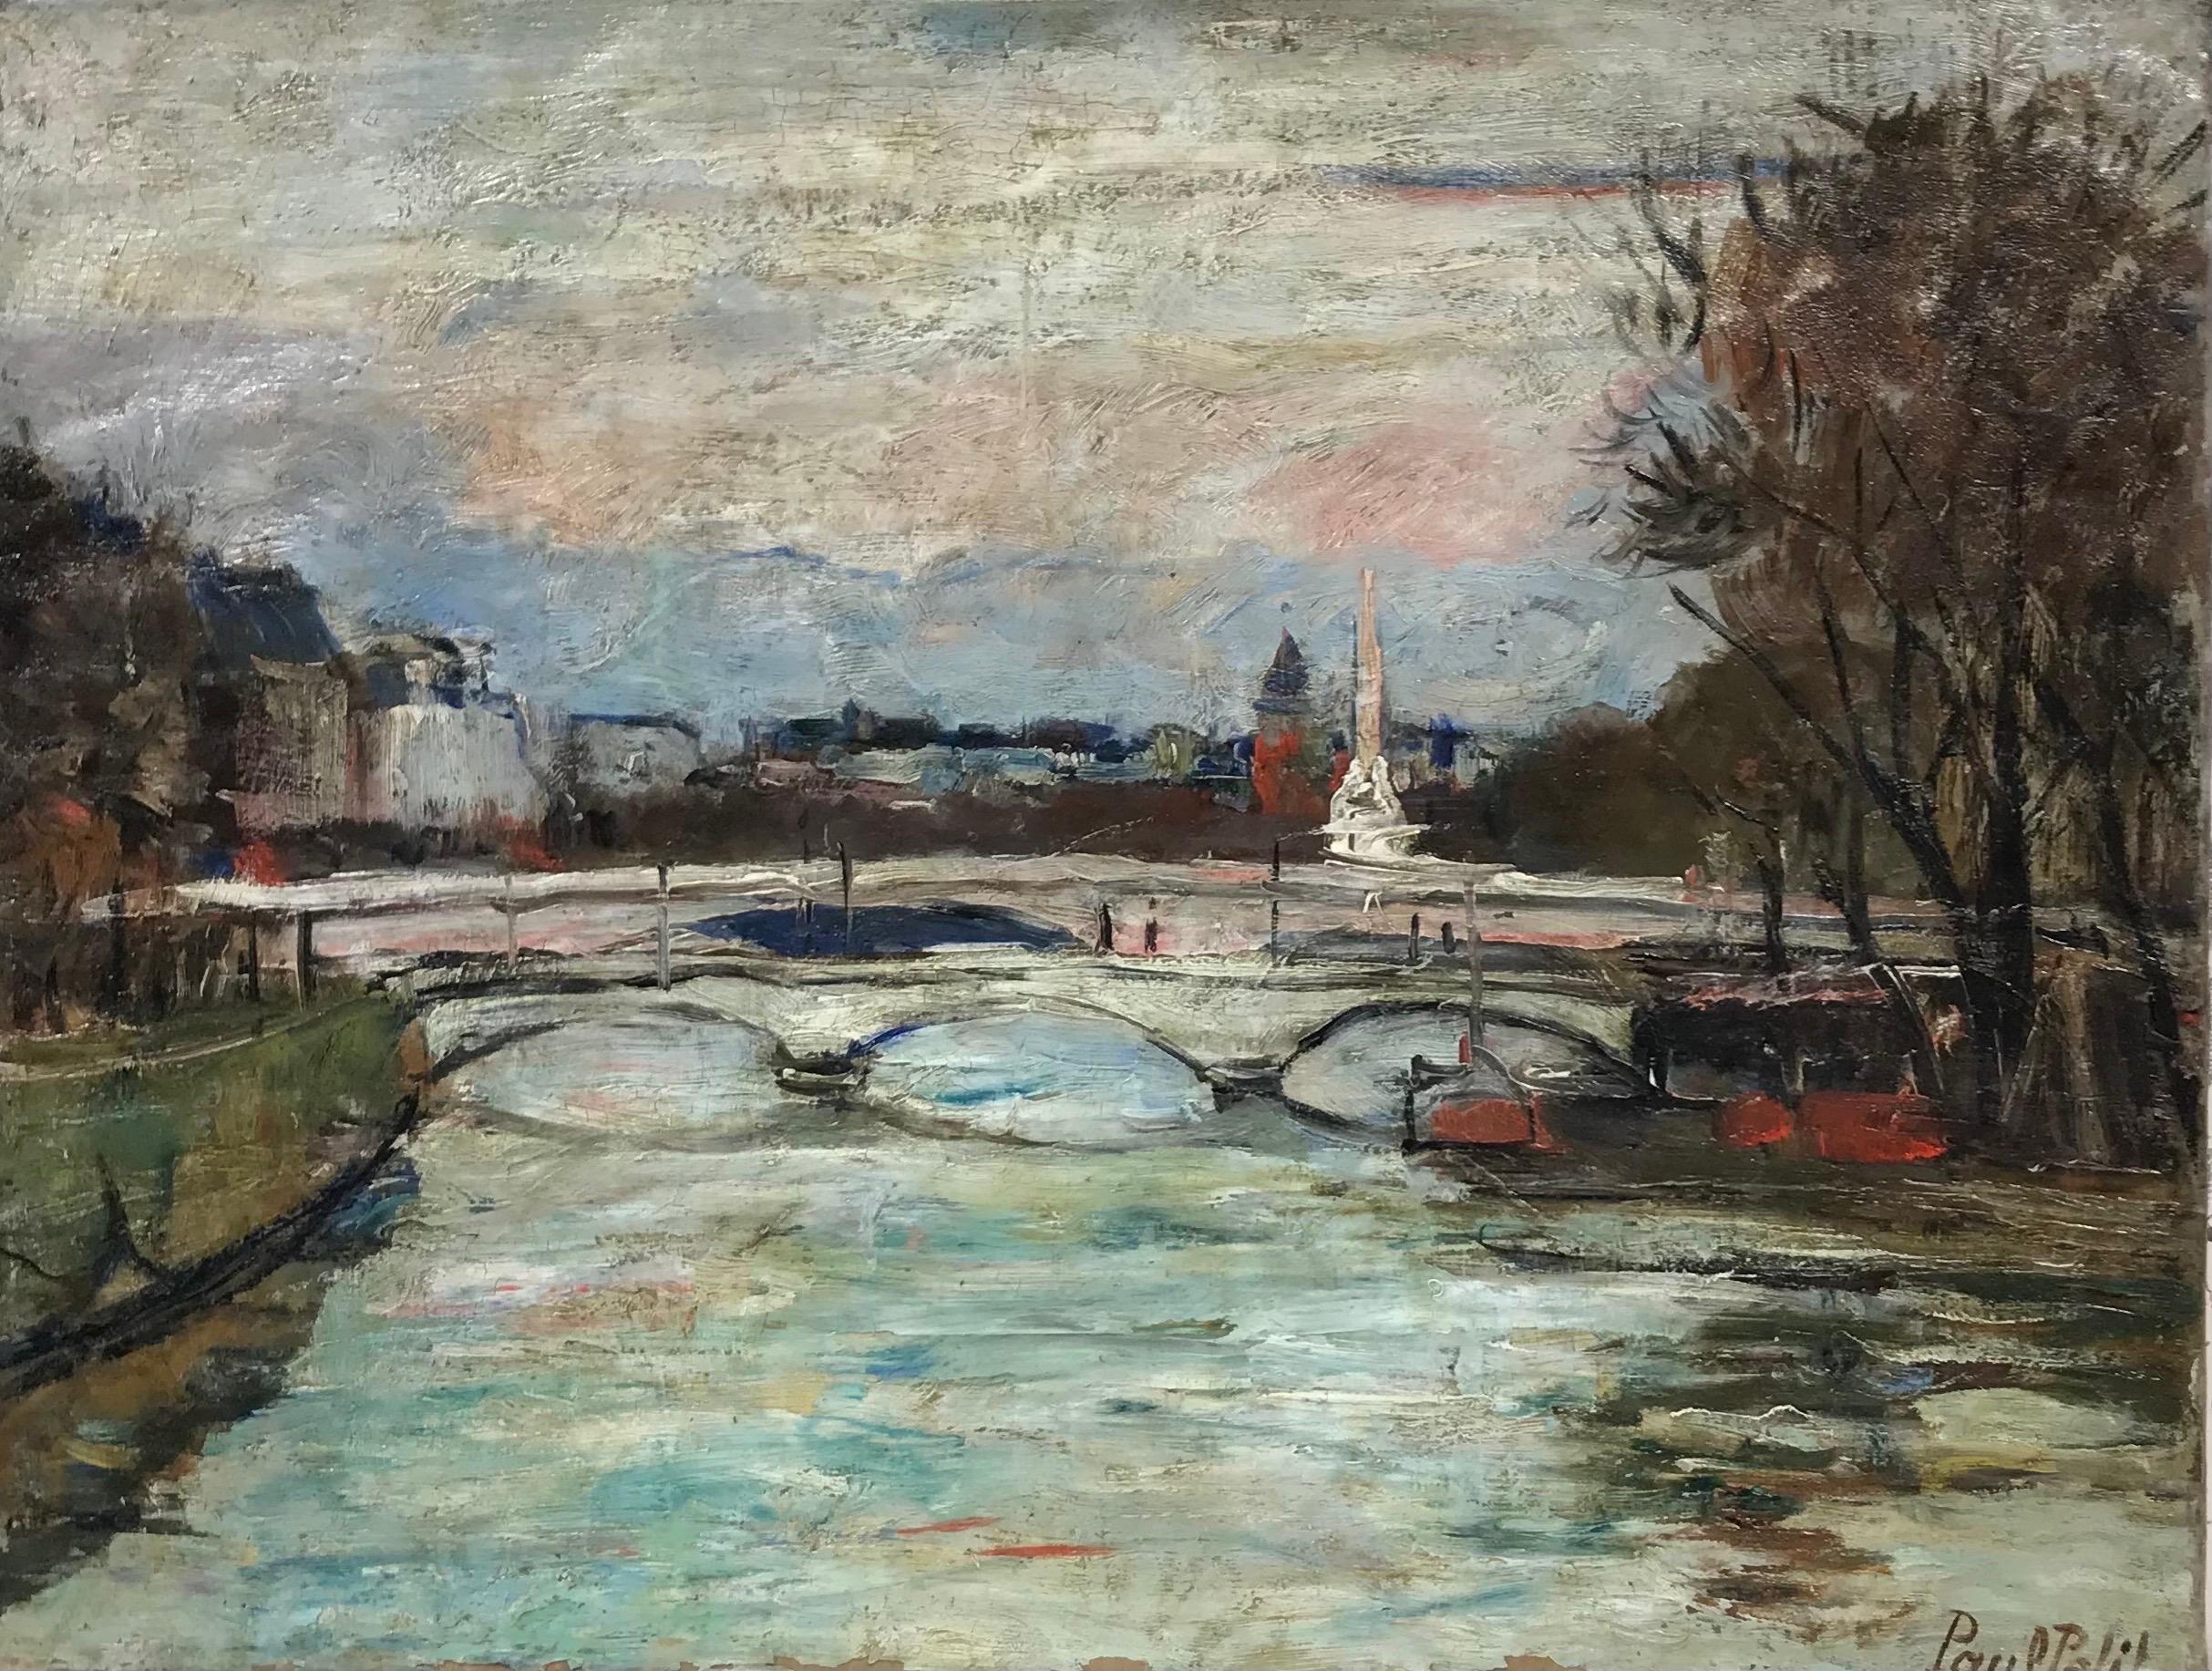 Paul Petit Landscape Painting - The River Seine Paris, signed French Post-Impressionist Oil Painting, c. 1930's